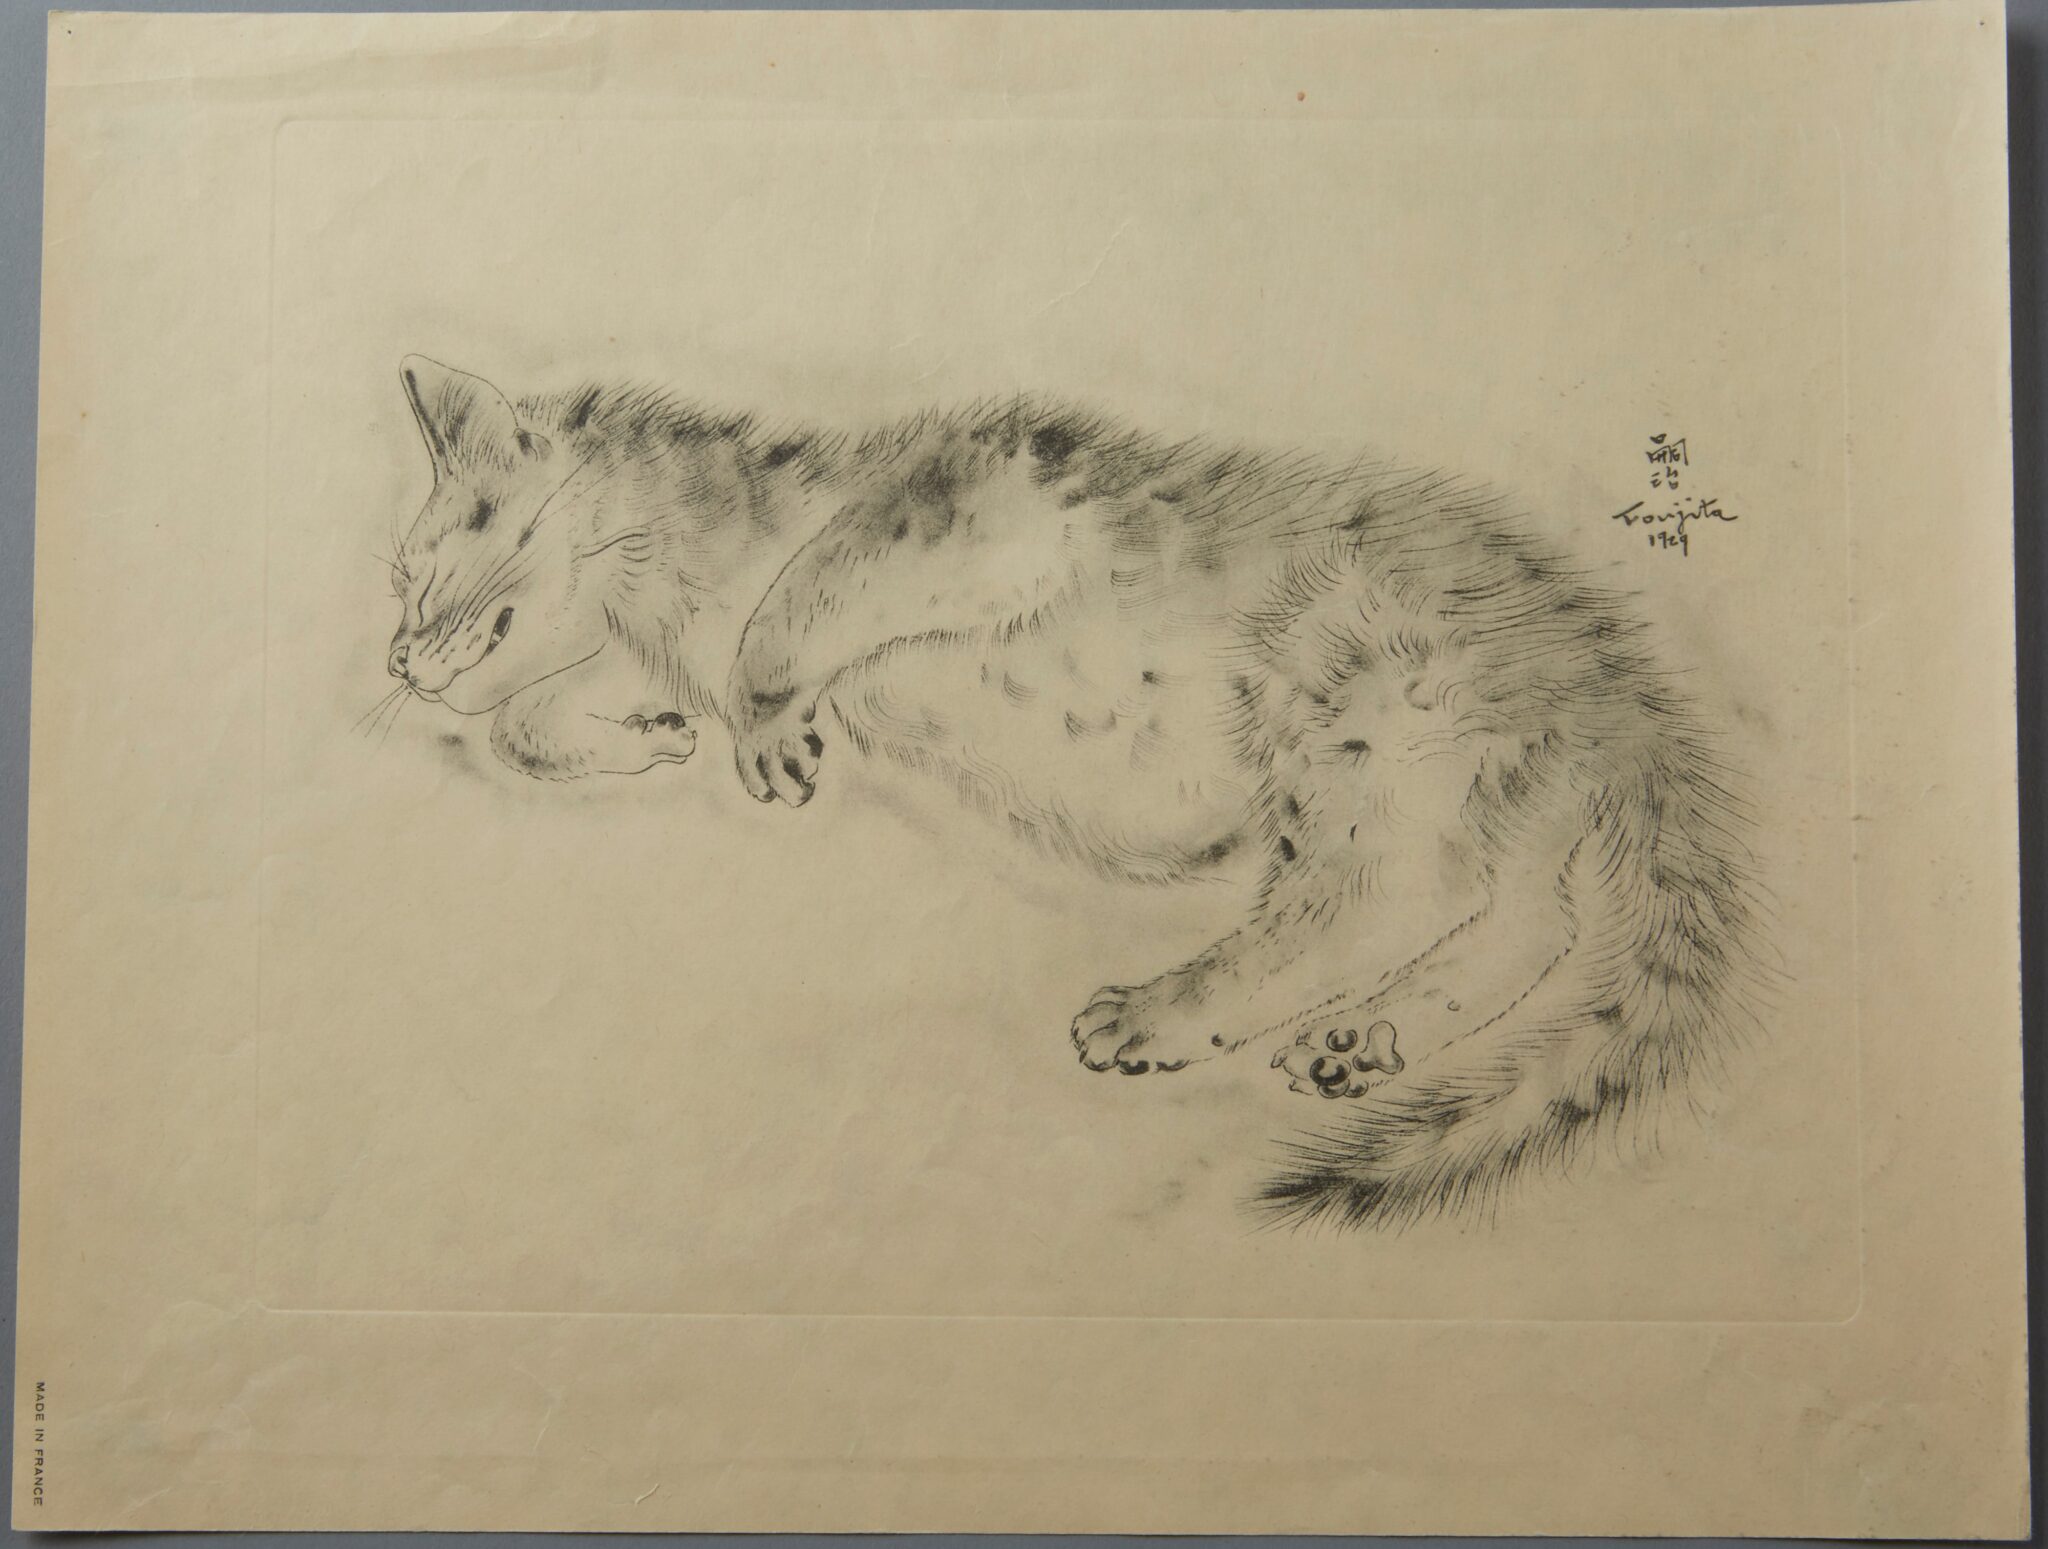 Leonard Tsuguharu Foujita, "Oliver" from "A Book of Cats"